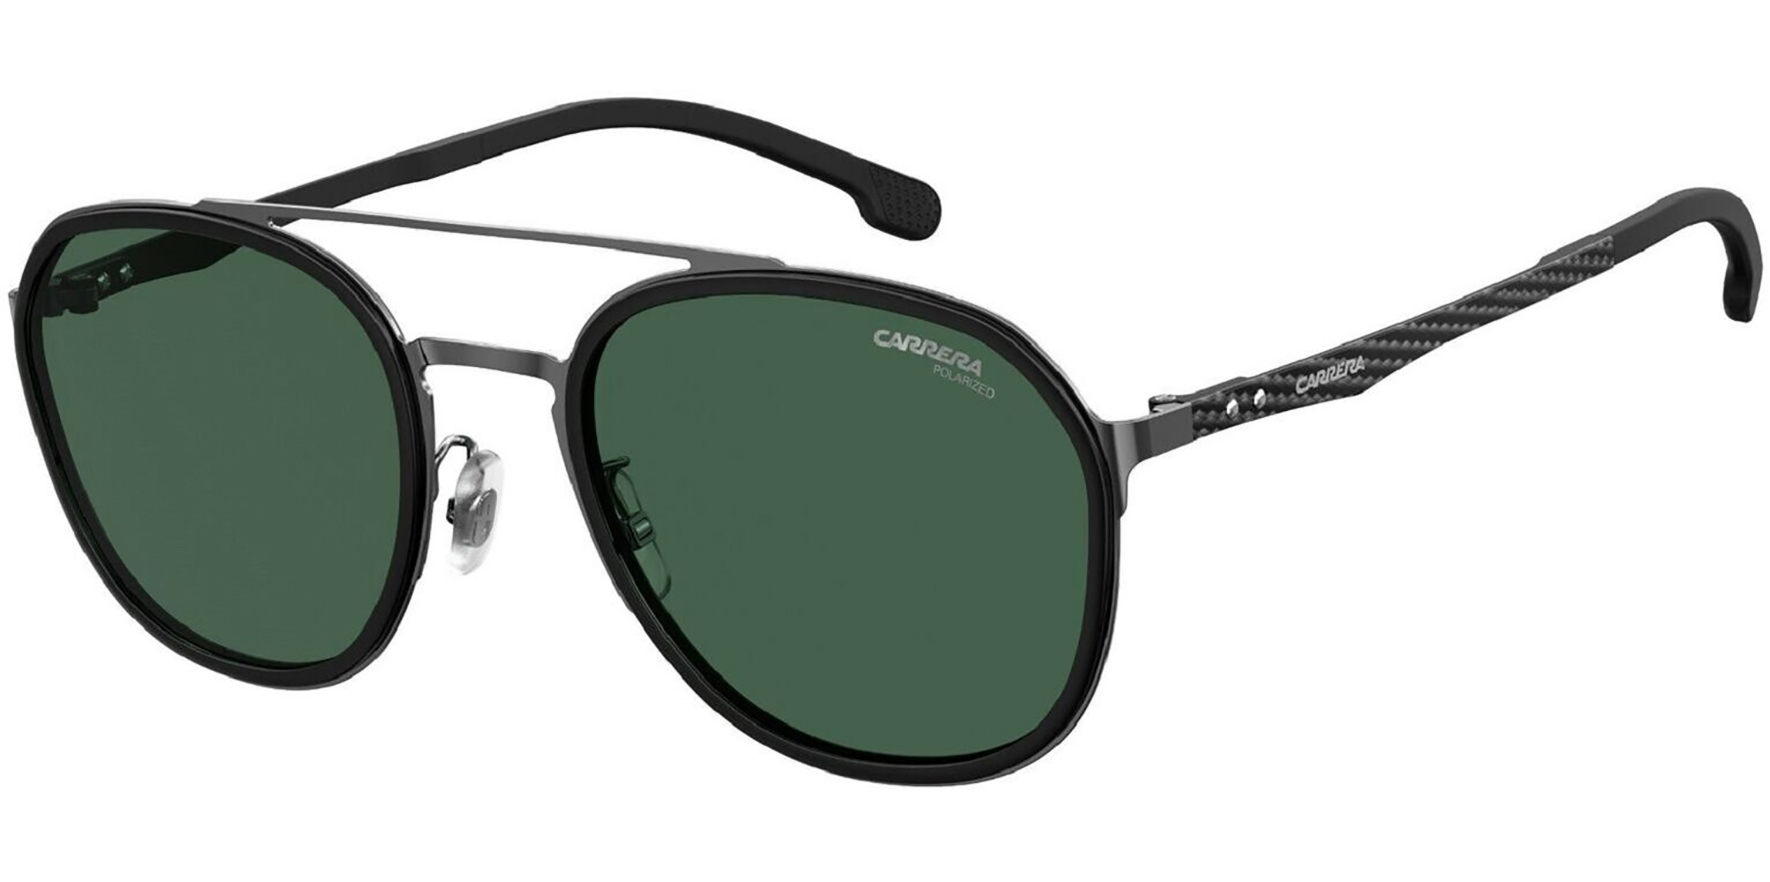 Carrera Polarized Sunglasses (various styles)